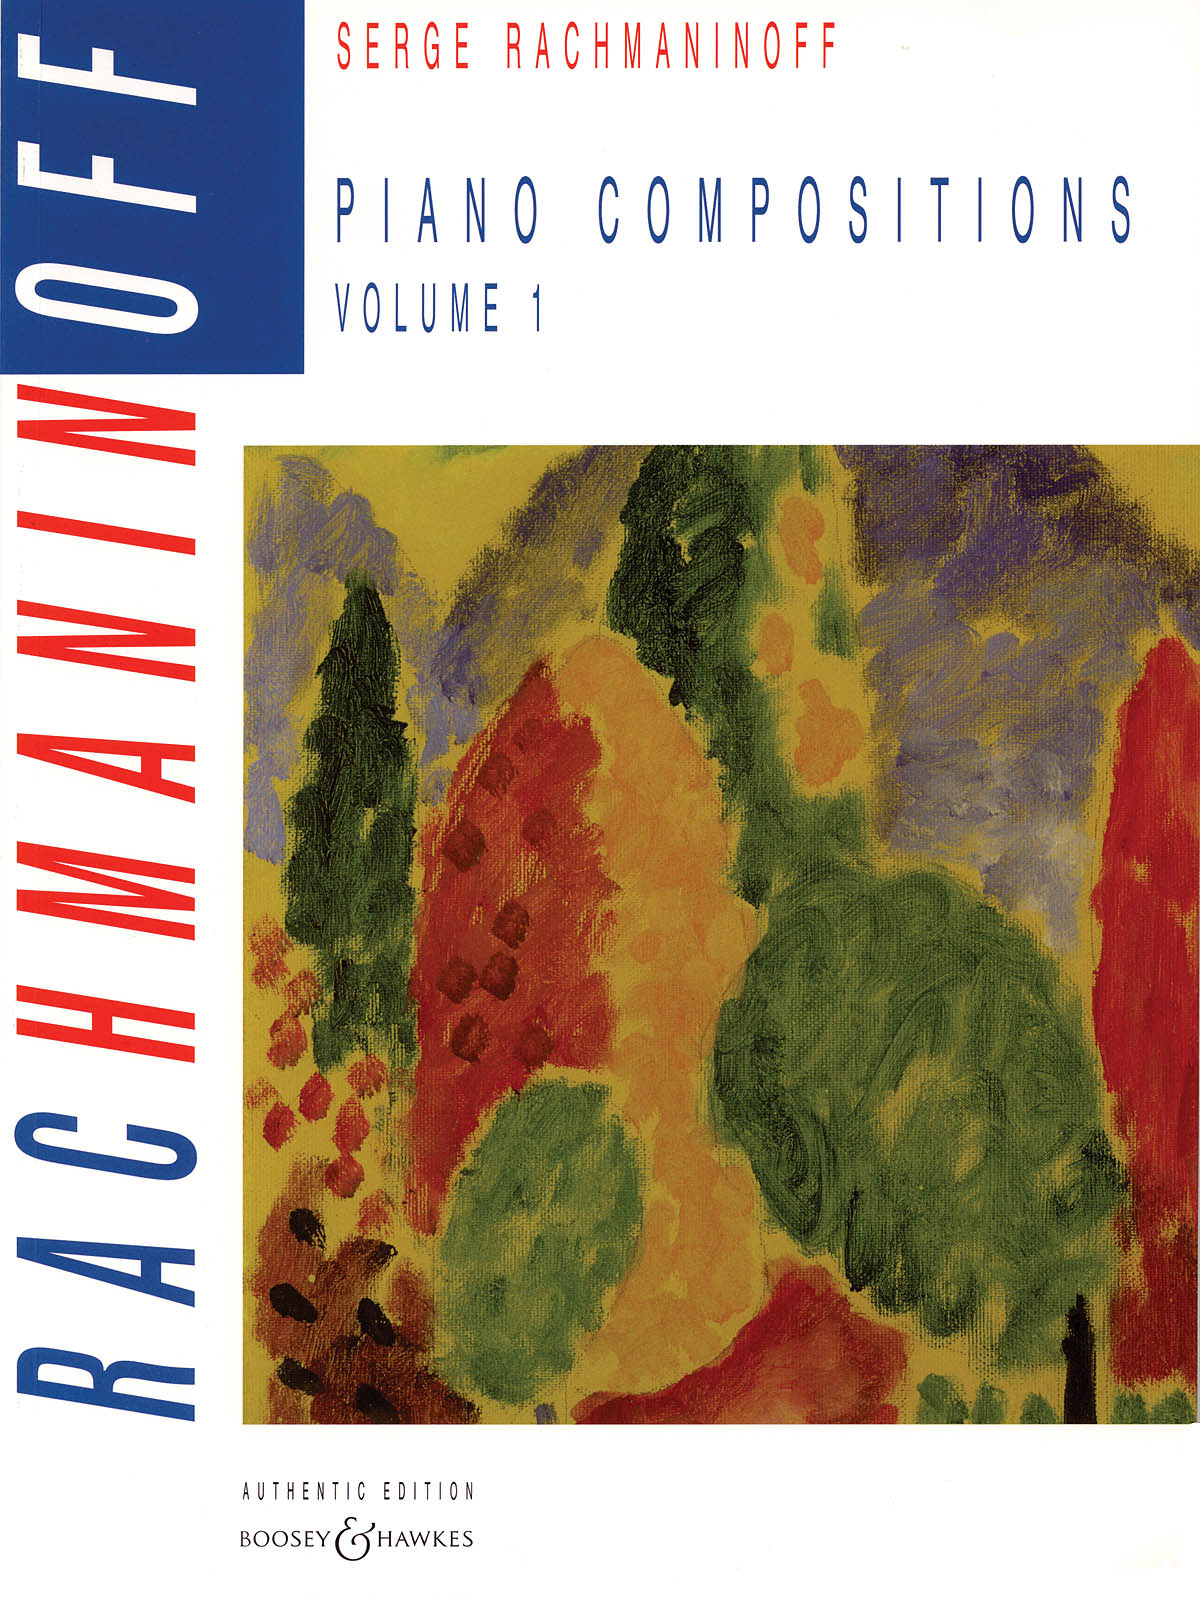 Rachmaninoff: Piano Compositions - Volume 1